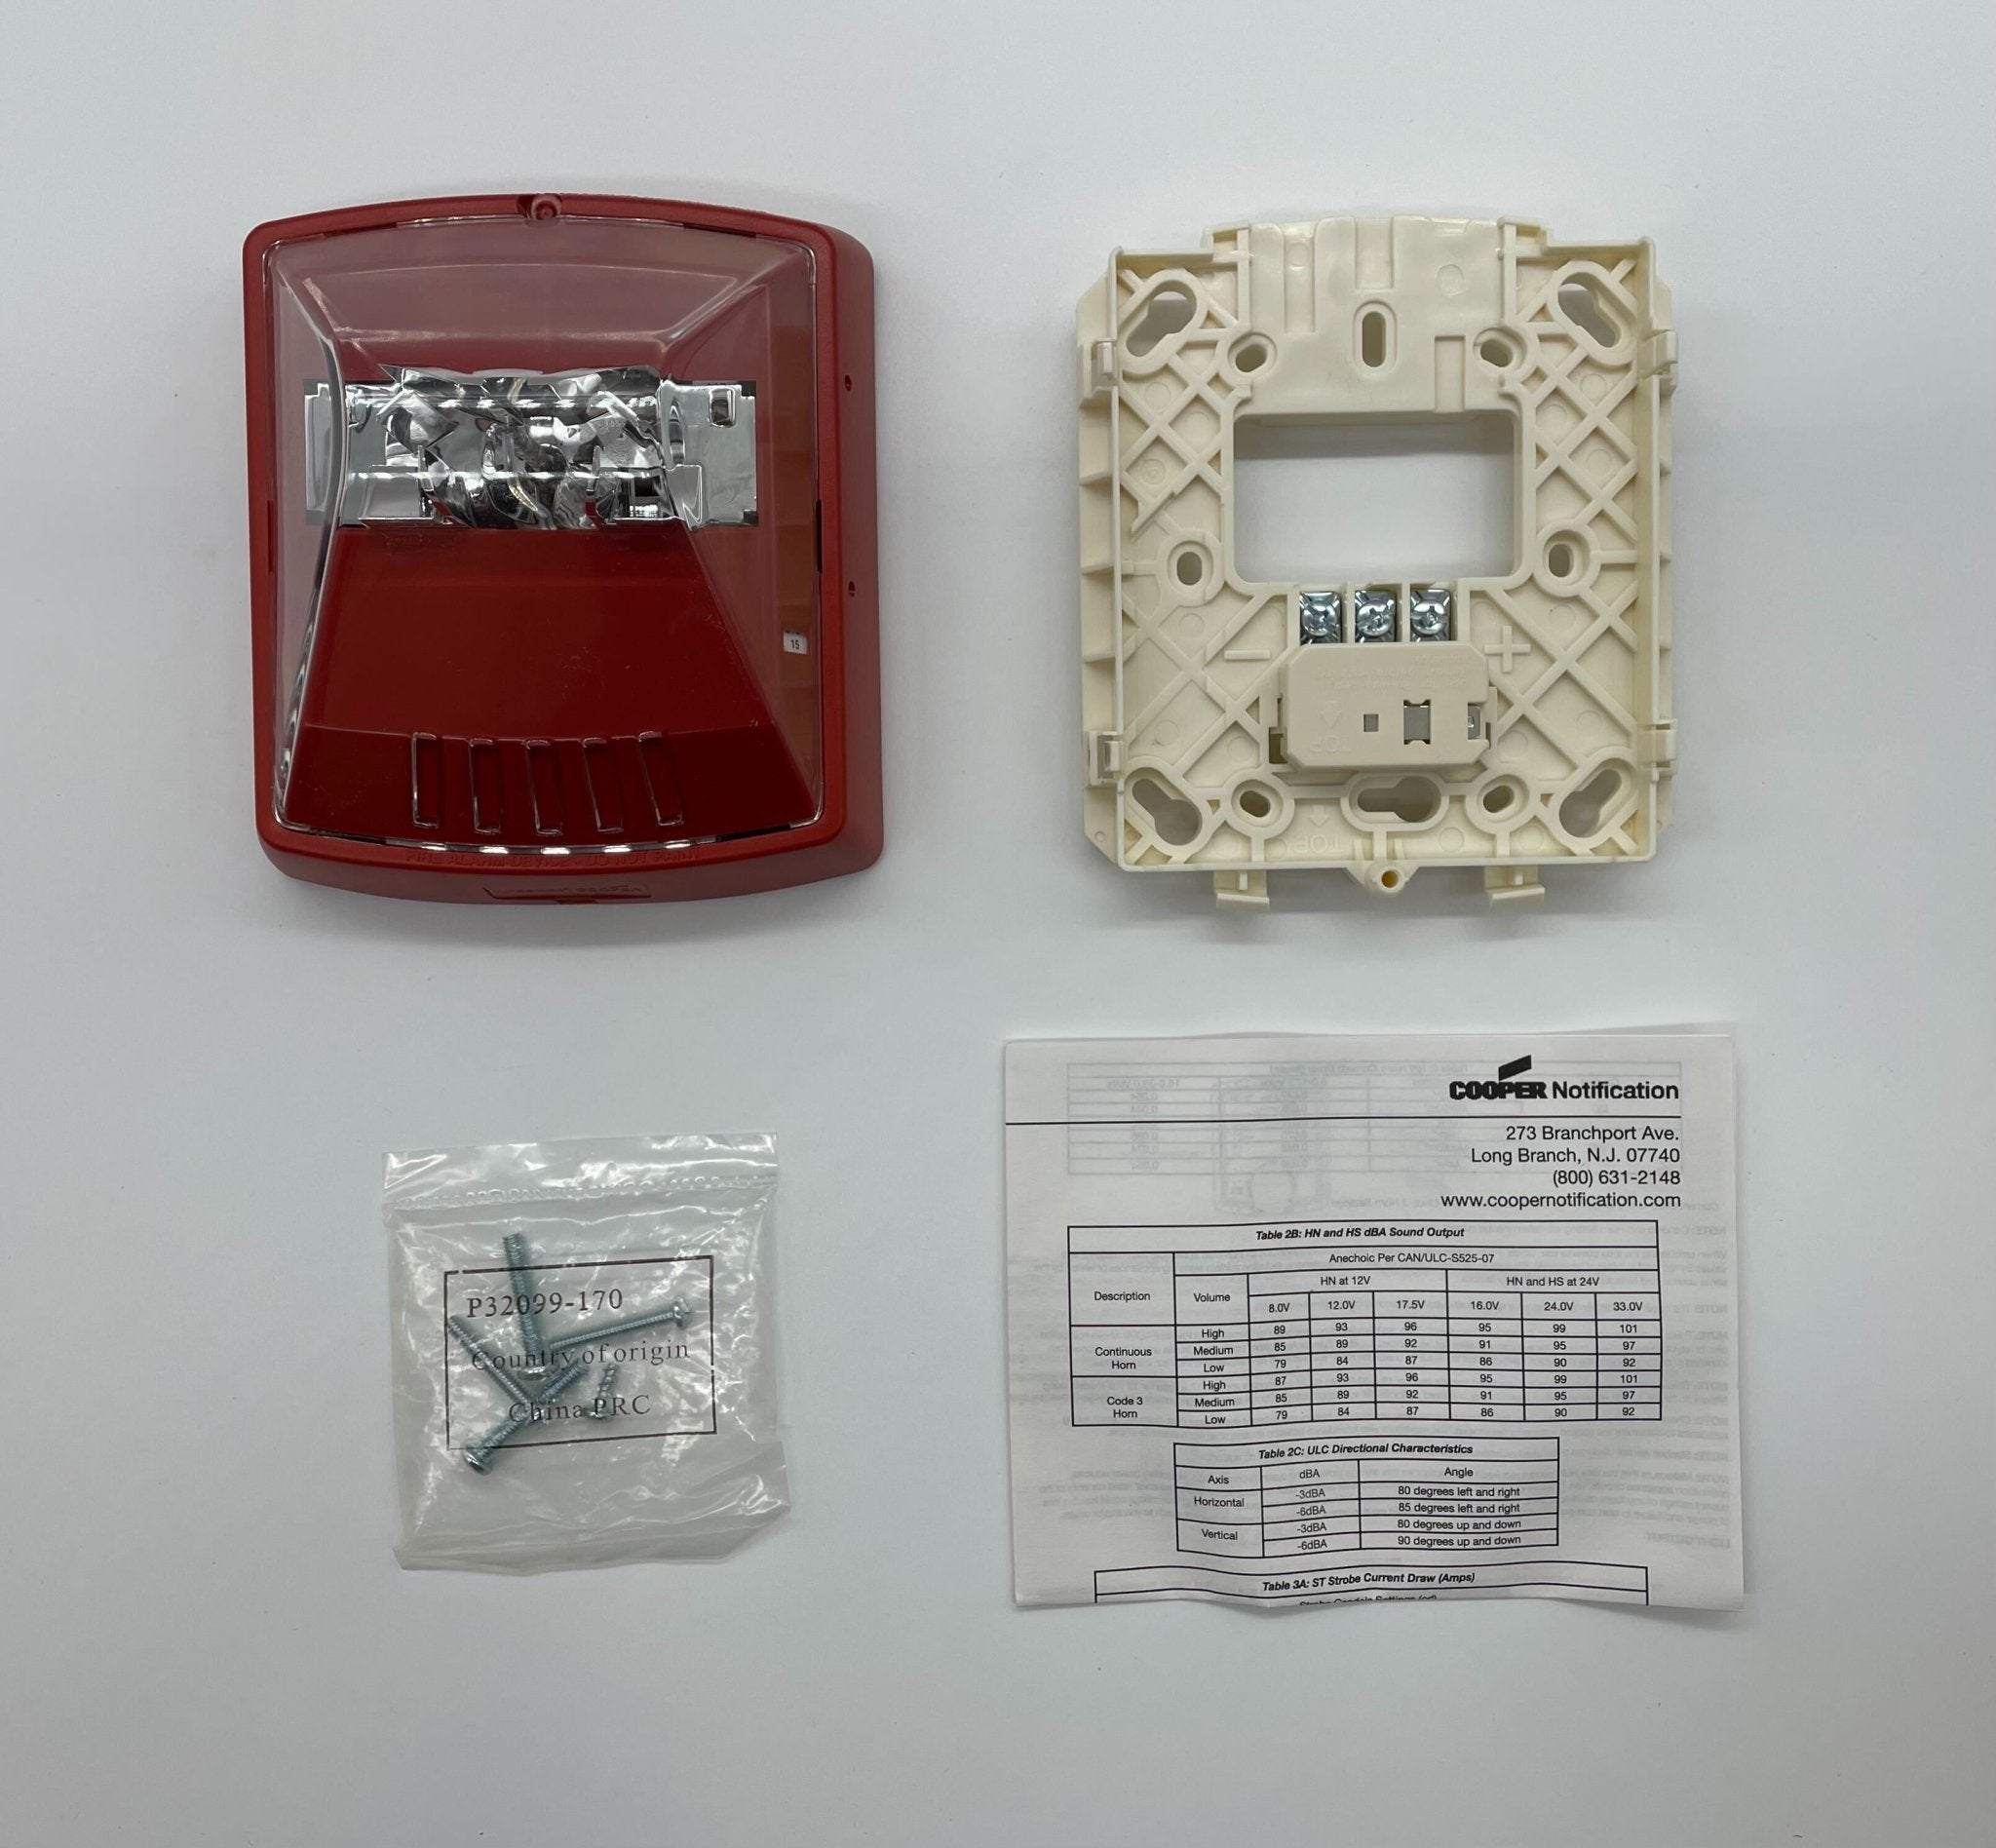 Wheelock STR-N - The Fire Alarm Supplier